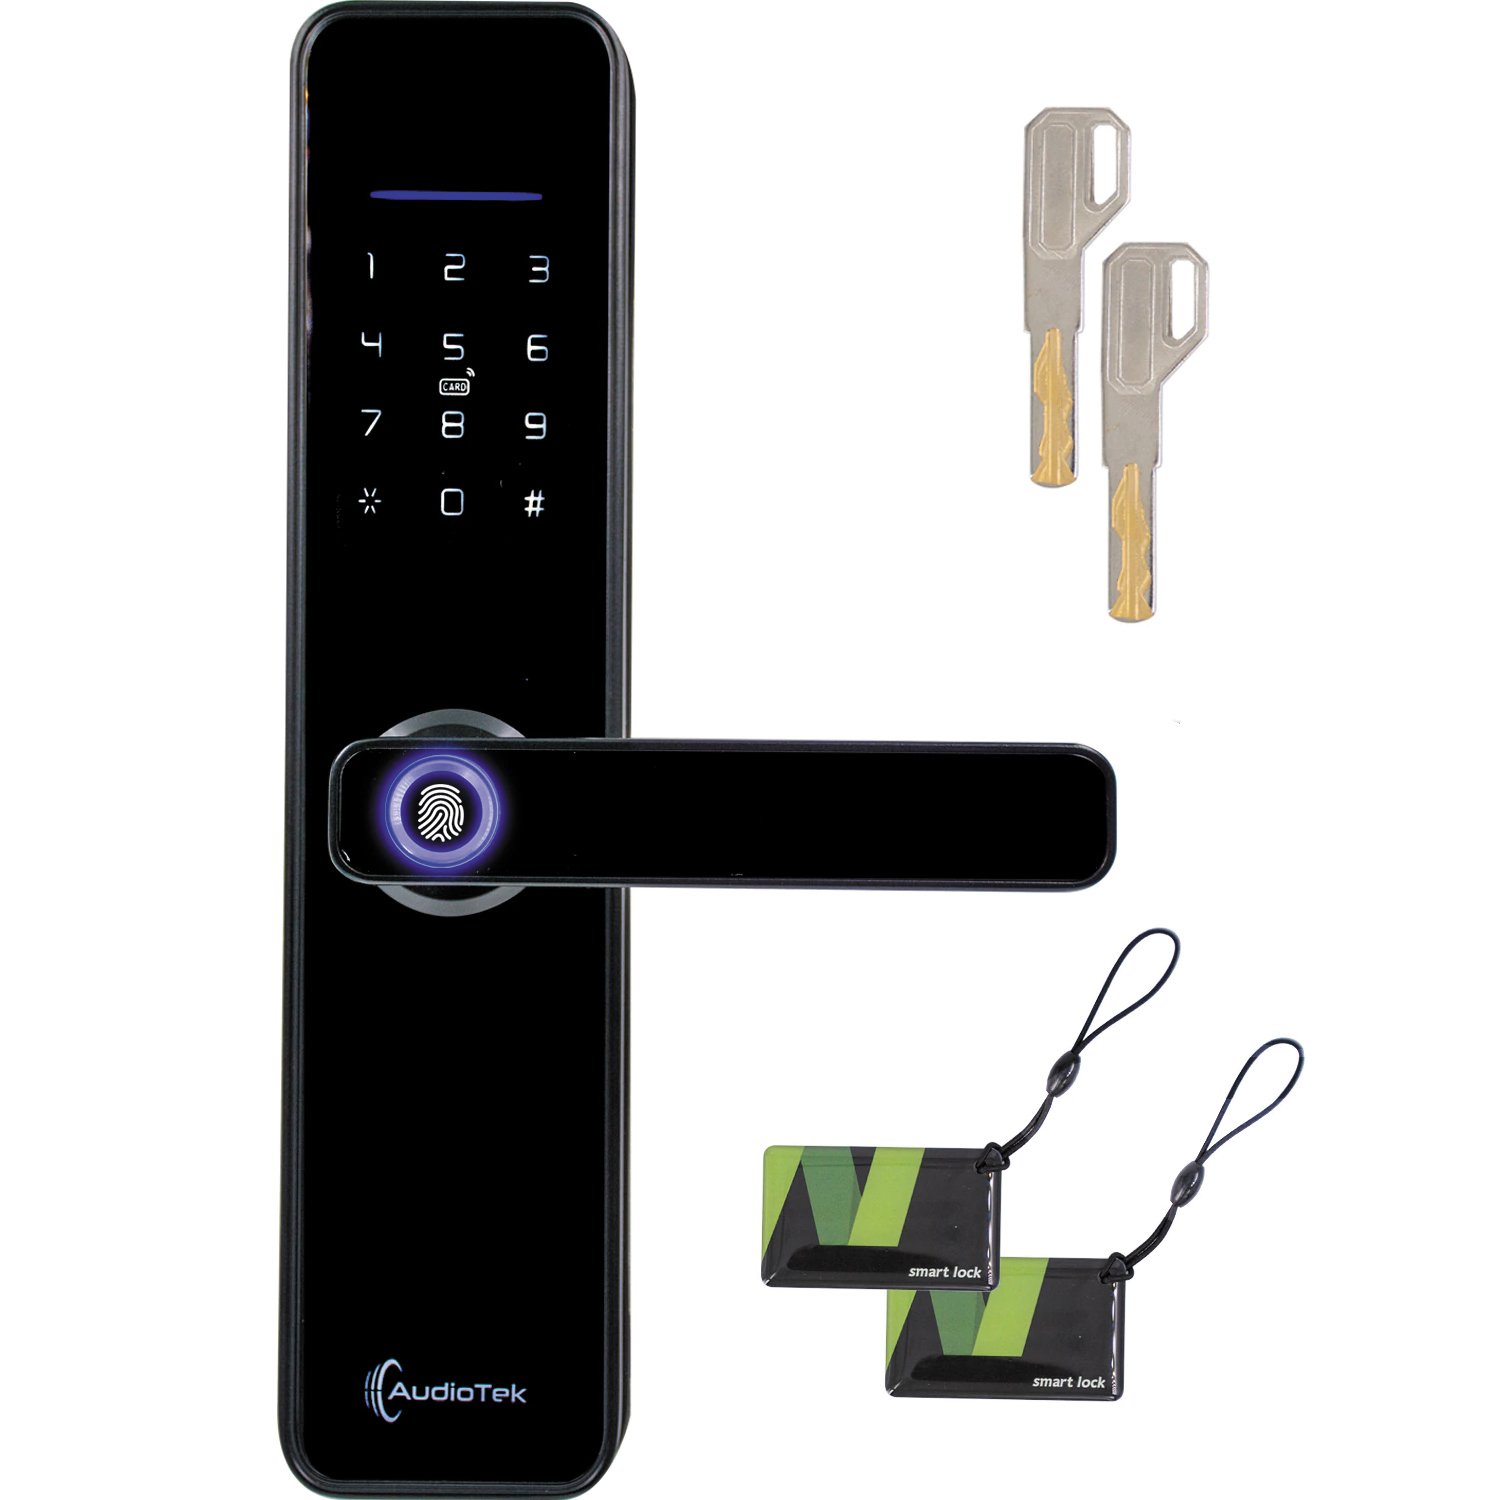 Cerradura Electronica Huella Biometrica Wifi Chapa Digital Inteligente App Seguridad